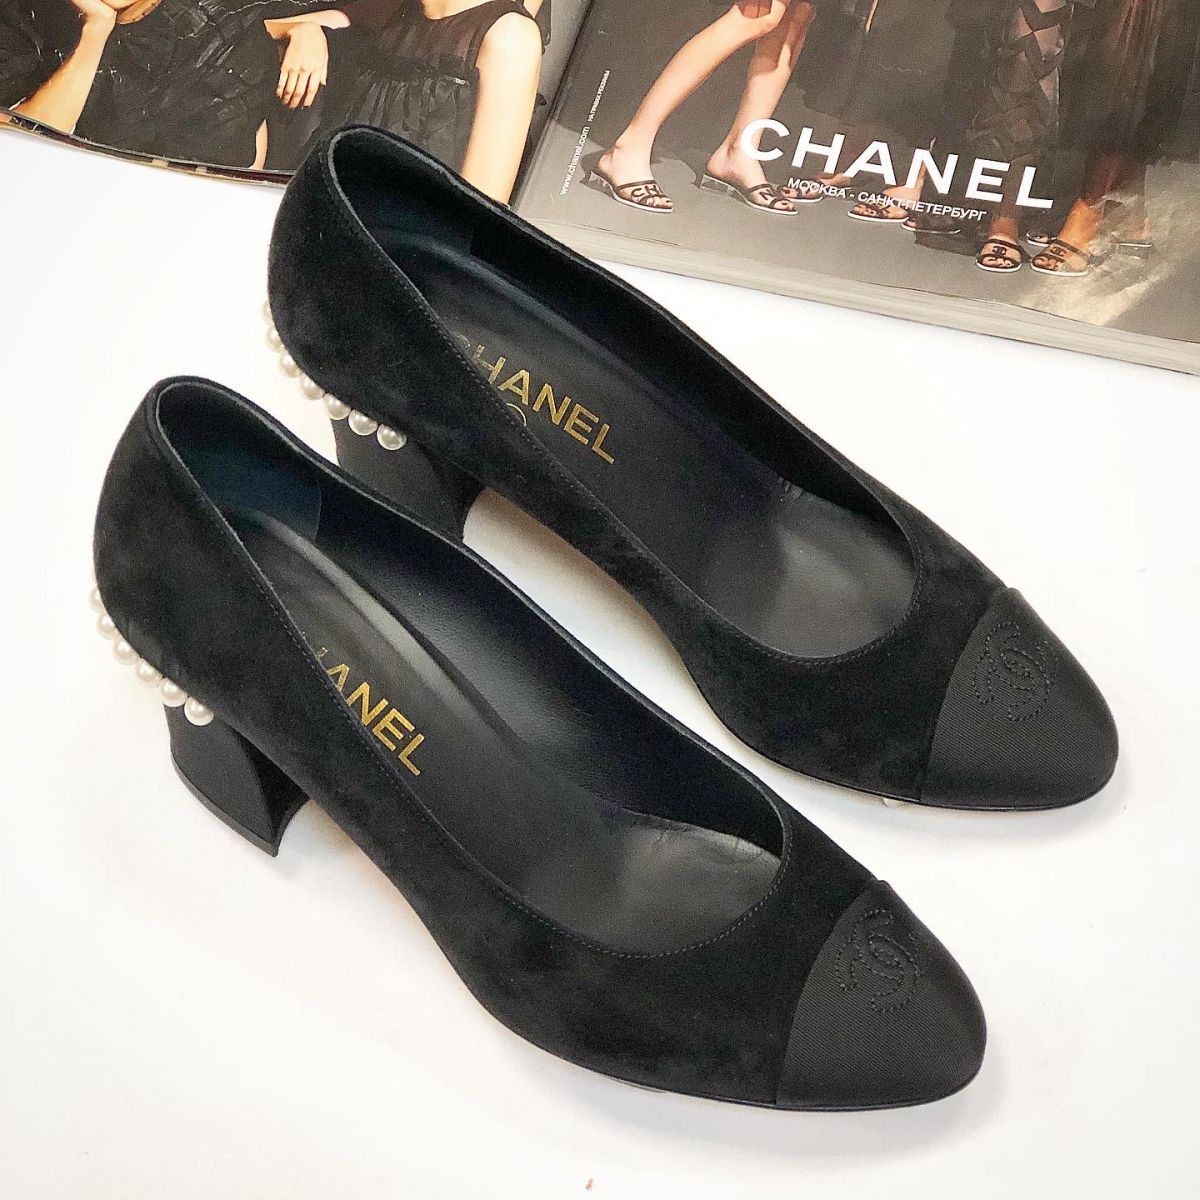 Туфли Chanel  размер 37.5 цена 30 770 руб